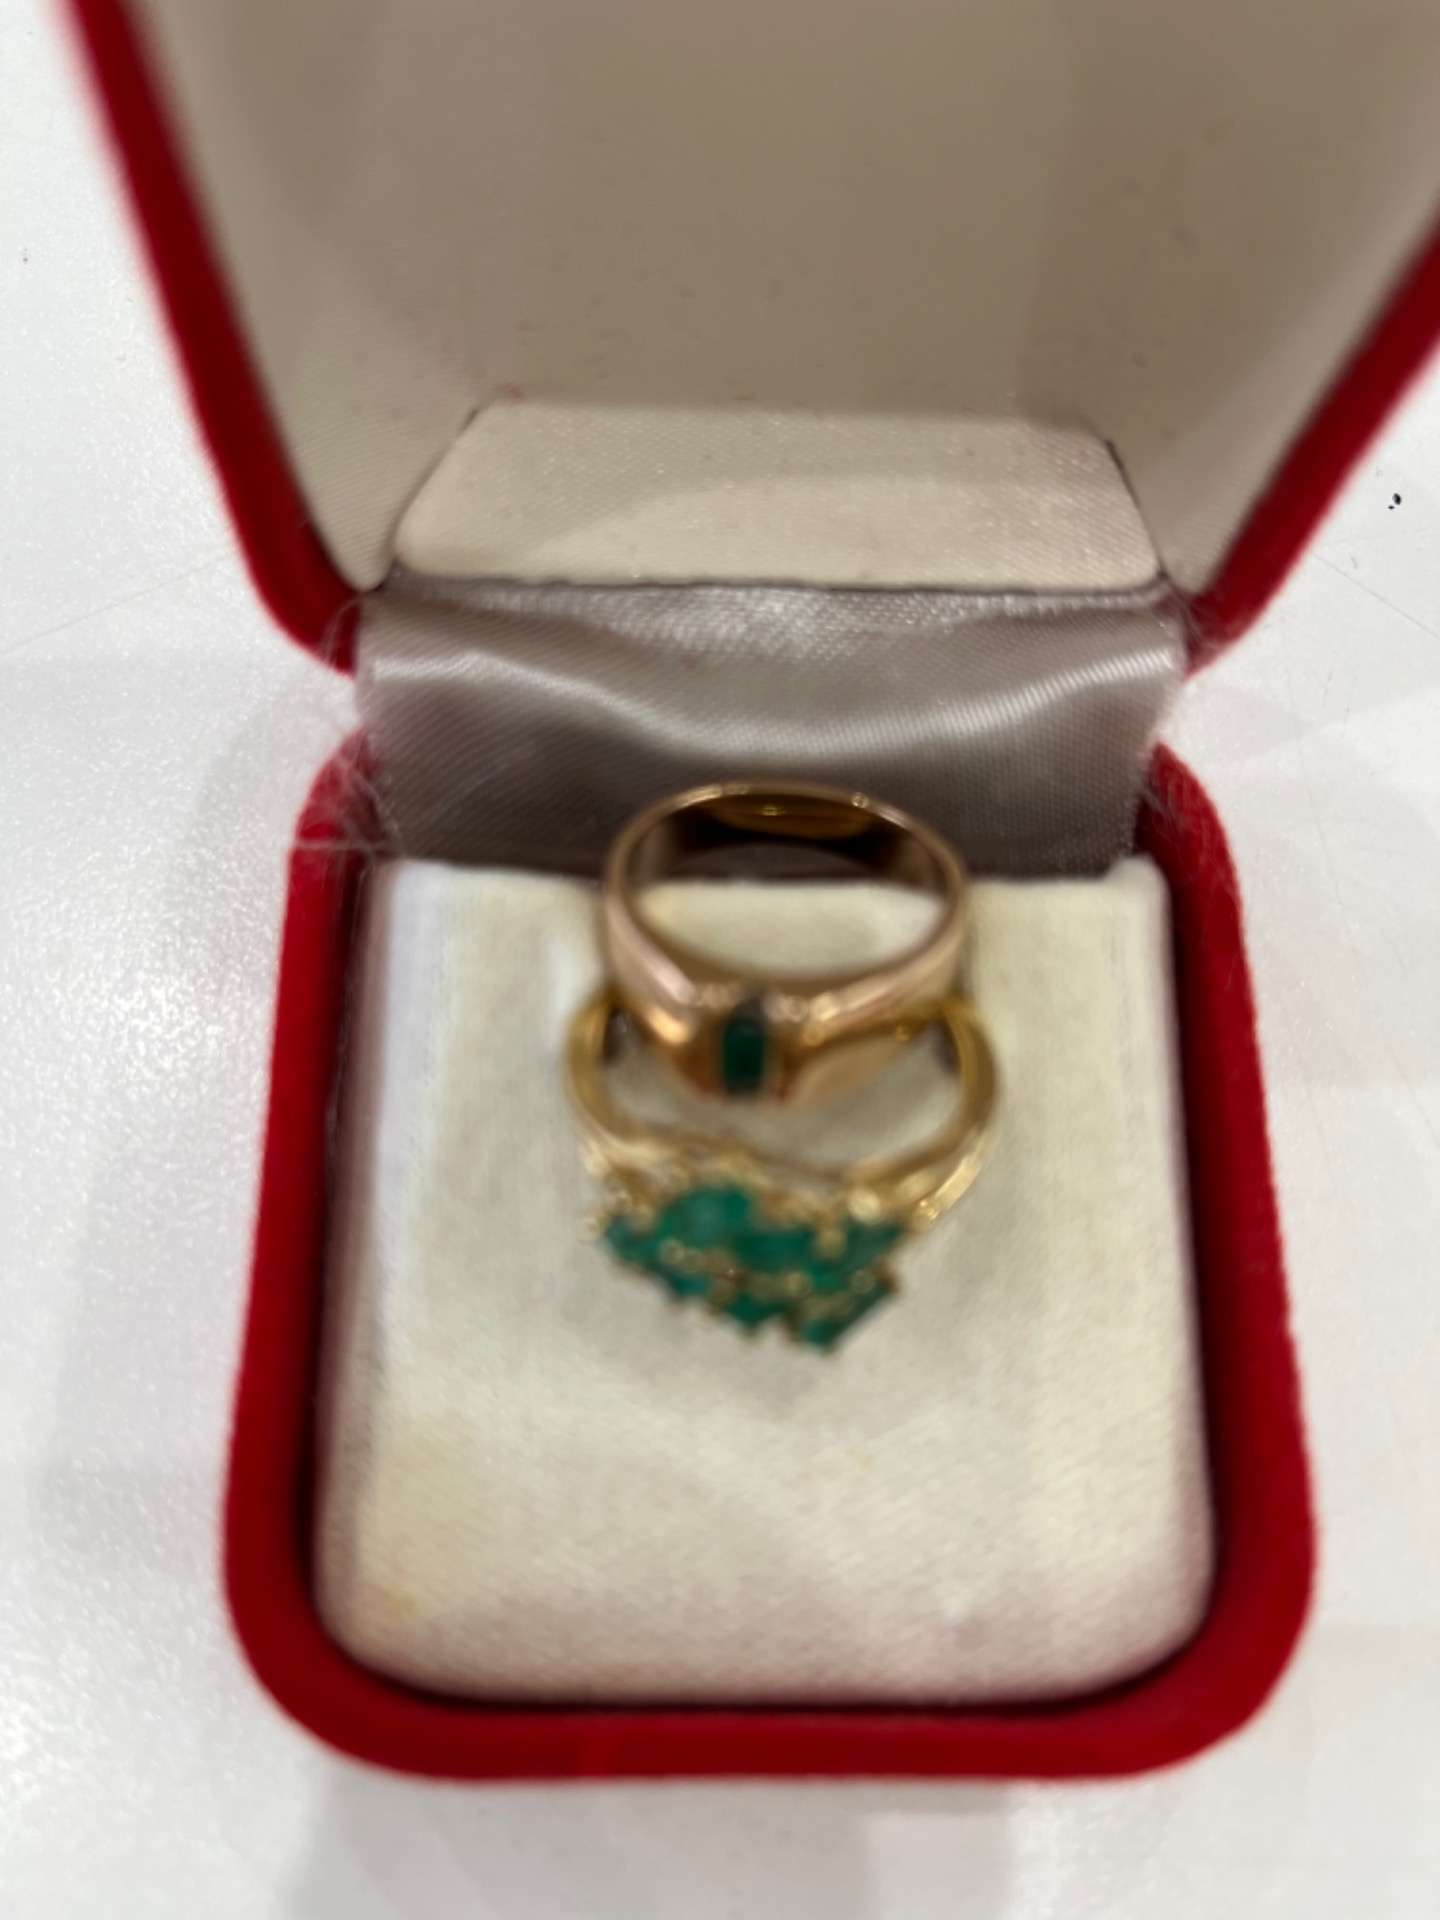 18K指輪を滋賀県近江八幡市の女性からお買取しました。